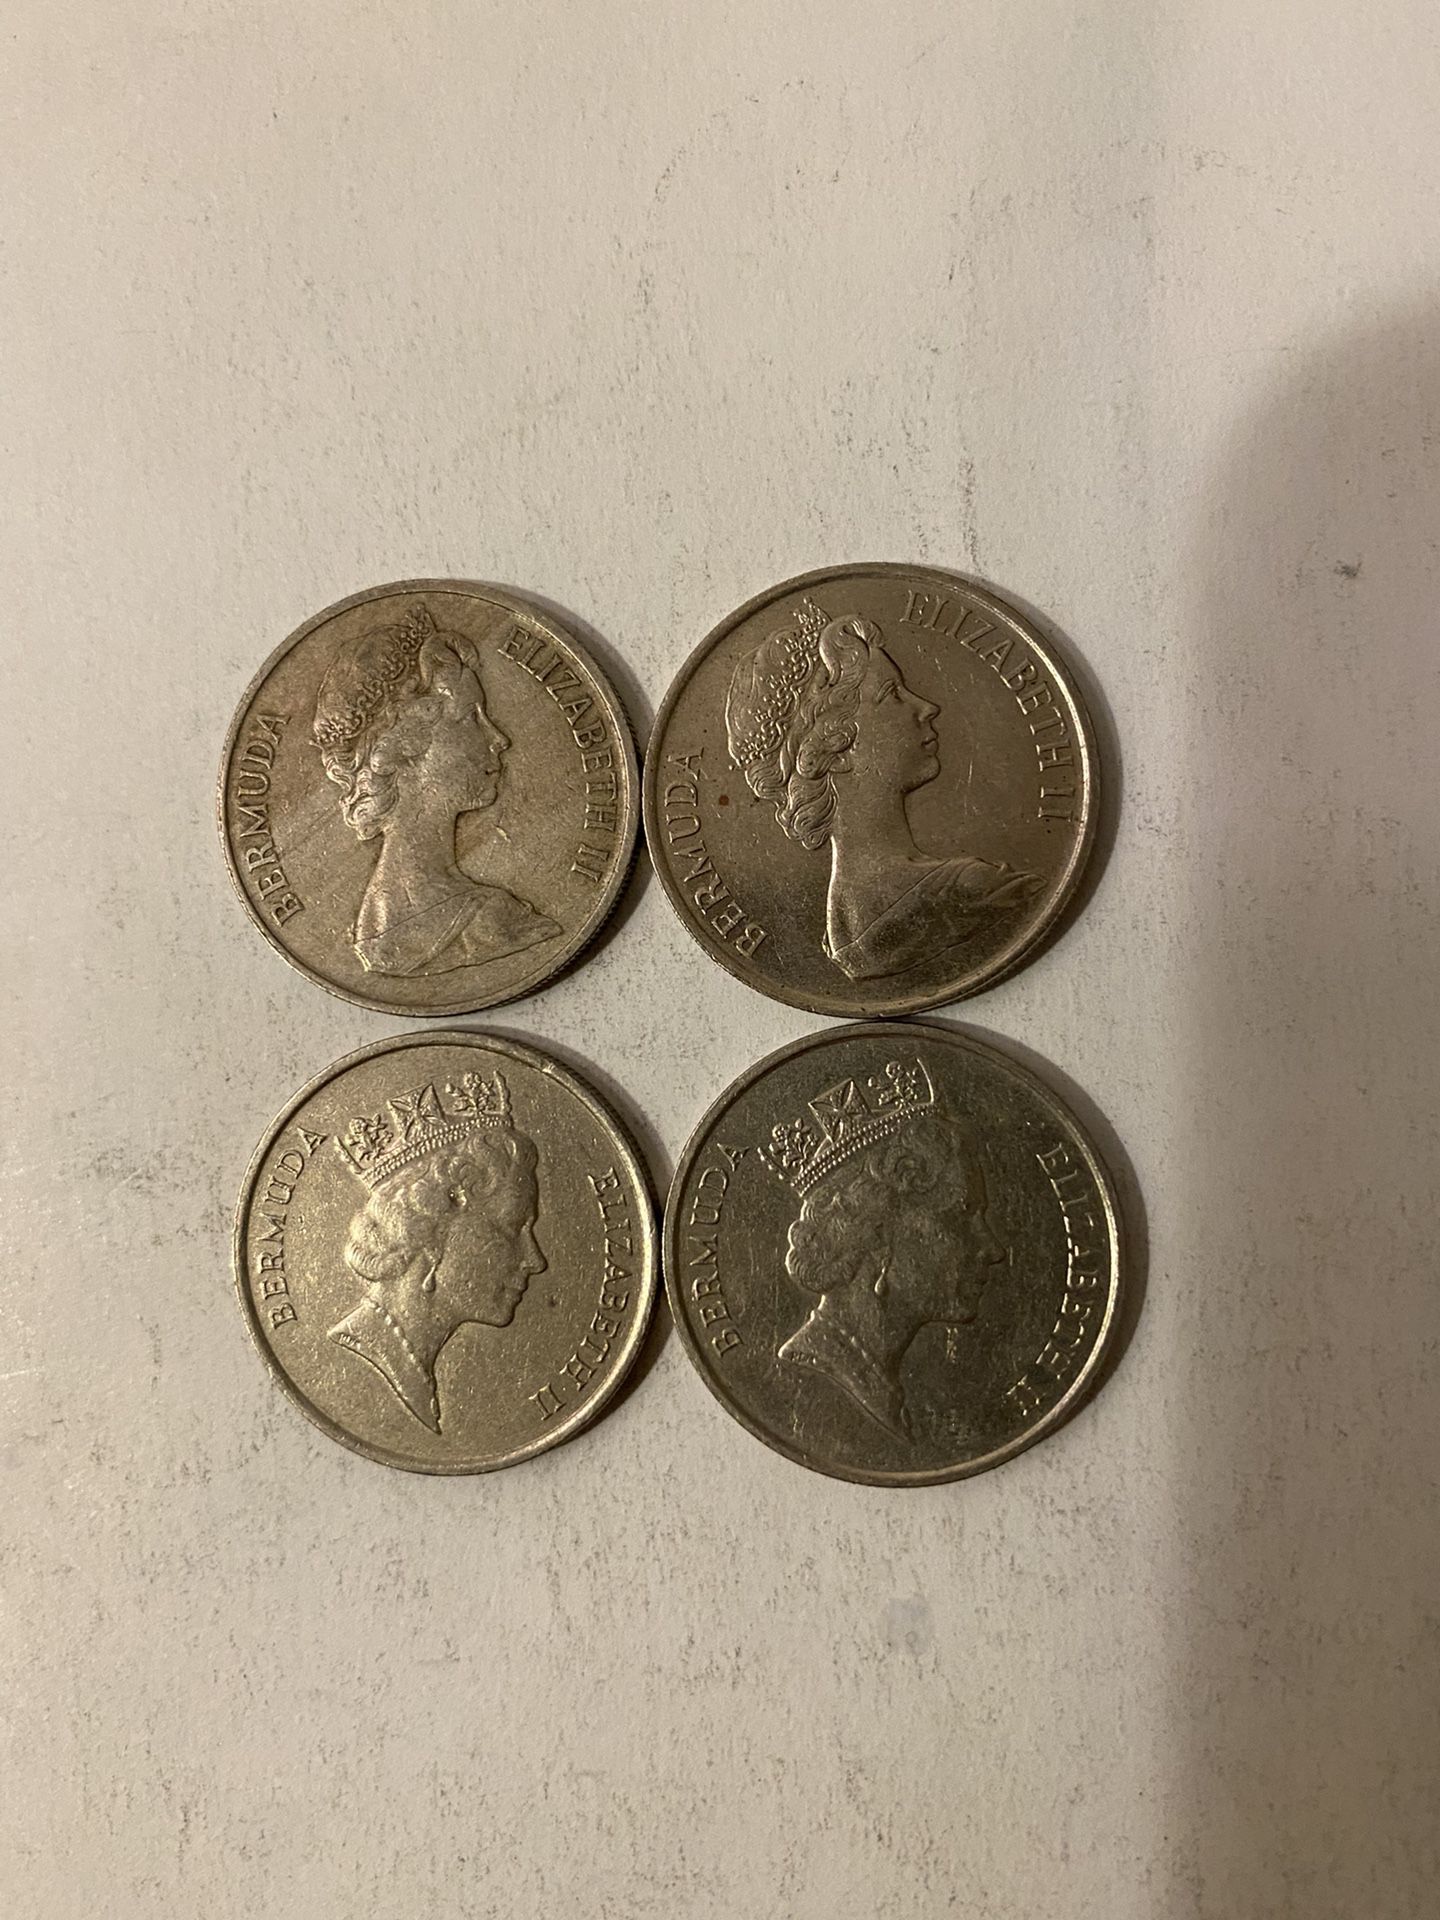 Queen Elizabeth Coins